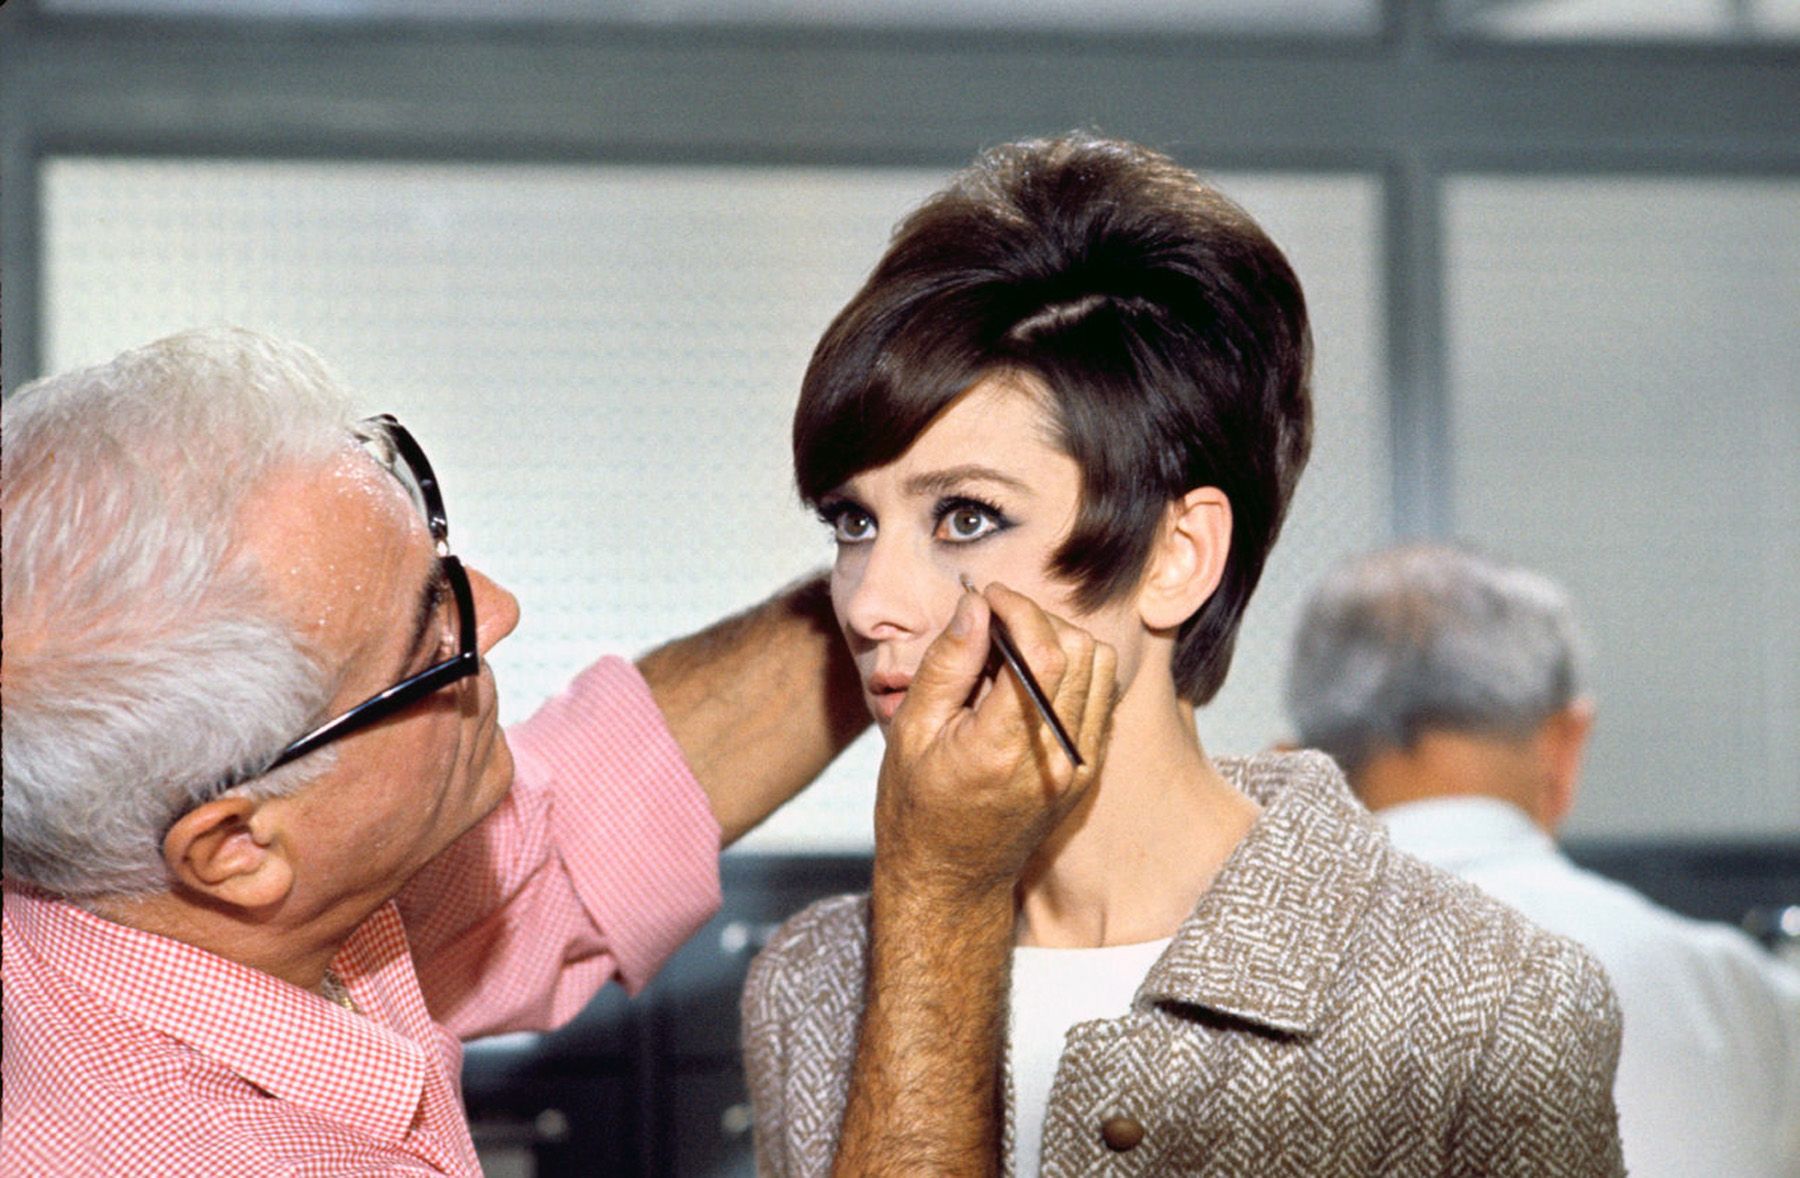 Audrey Hepburn having her eye makeup done by a makeup artist